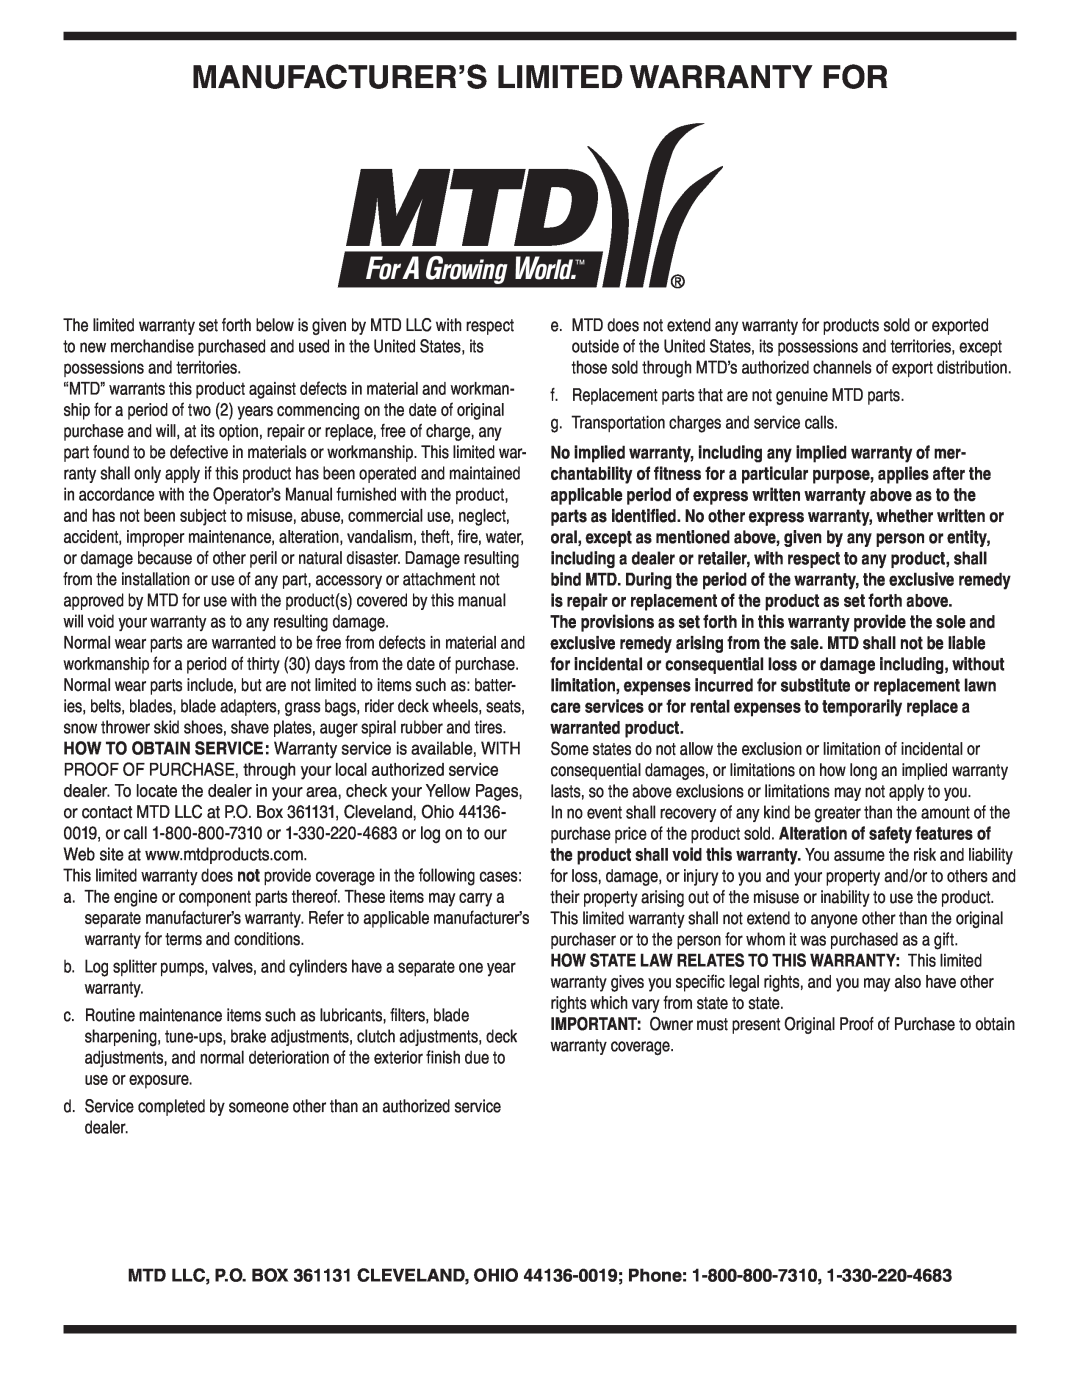 MTD Series 521 warranty Manufacturer’S Limited Warranty For 